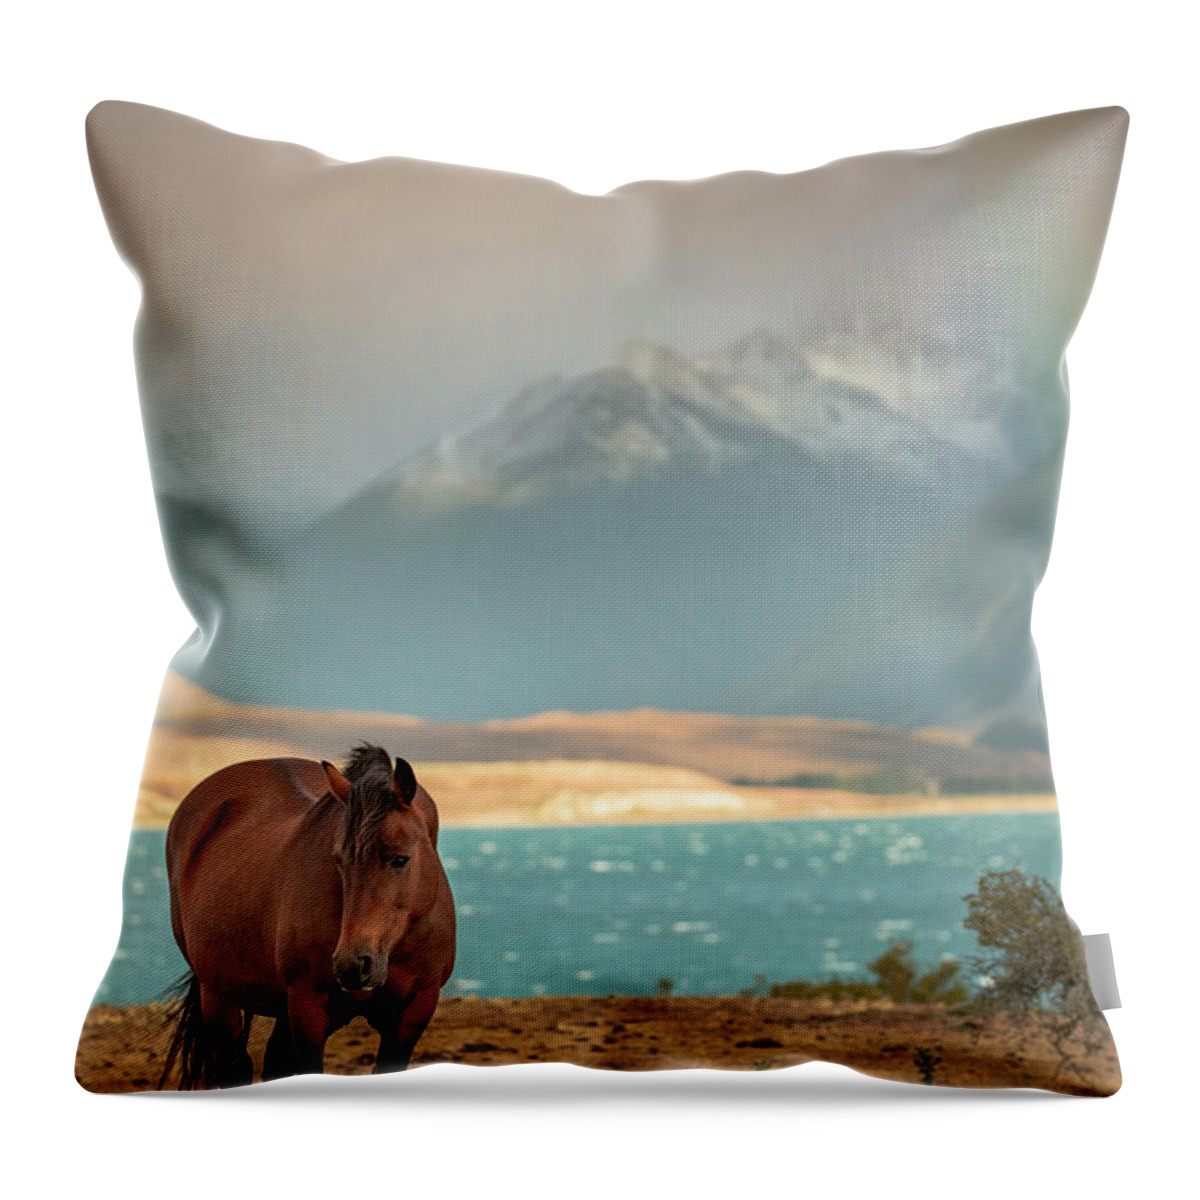 New Zealand Throw Pillow featuring the photograph Tekapo Horse by Chris Cousins